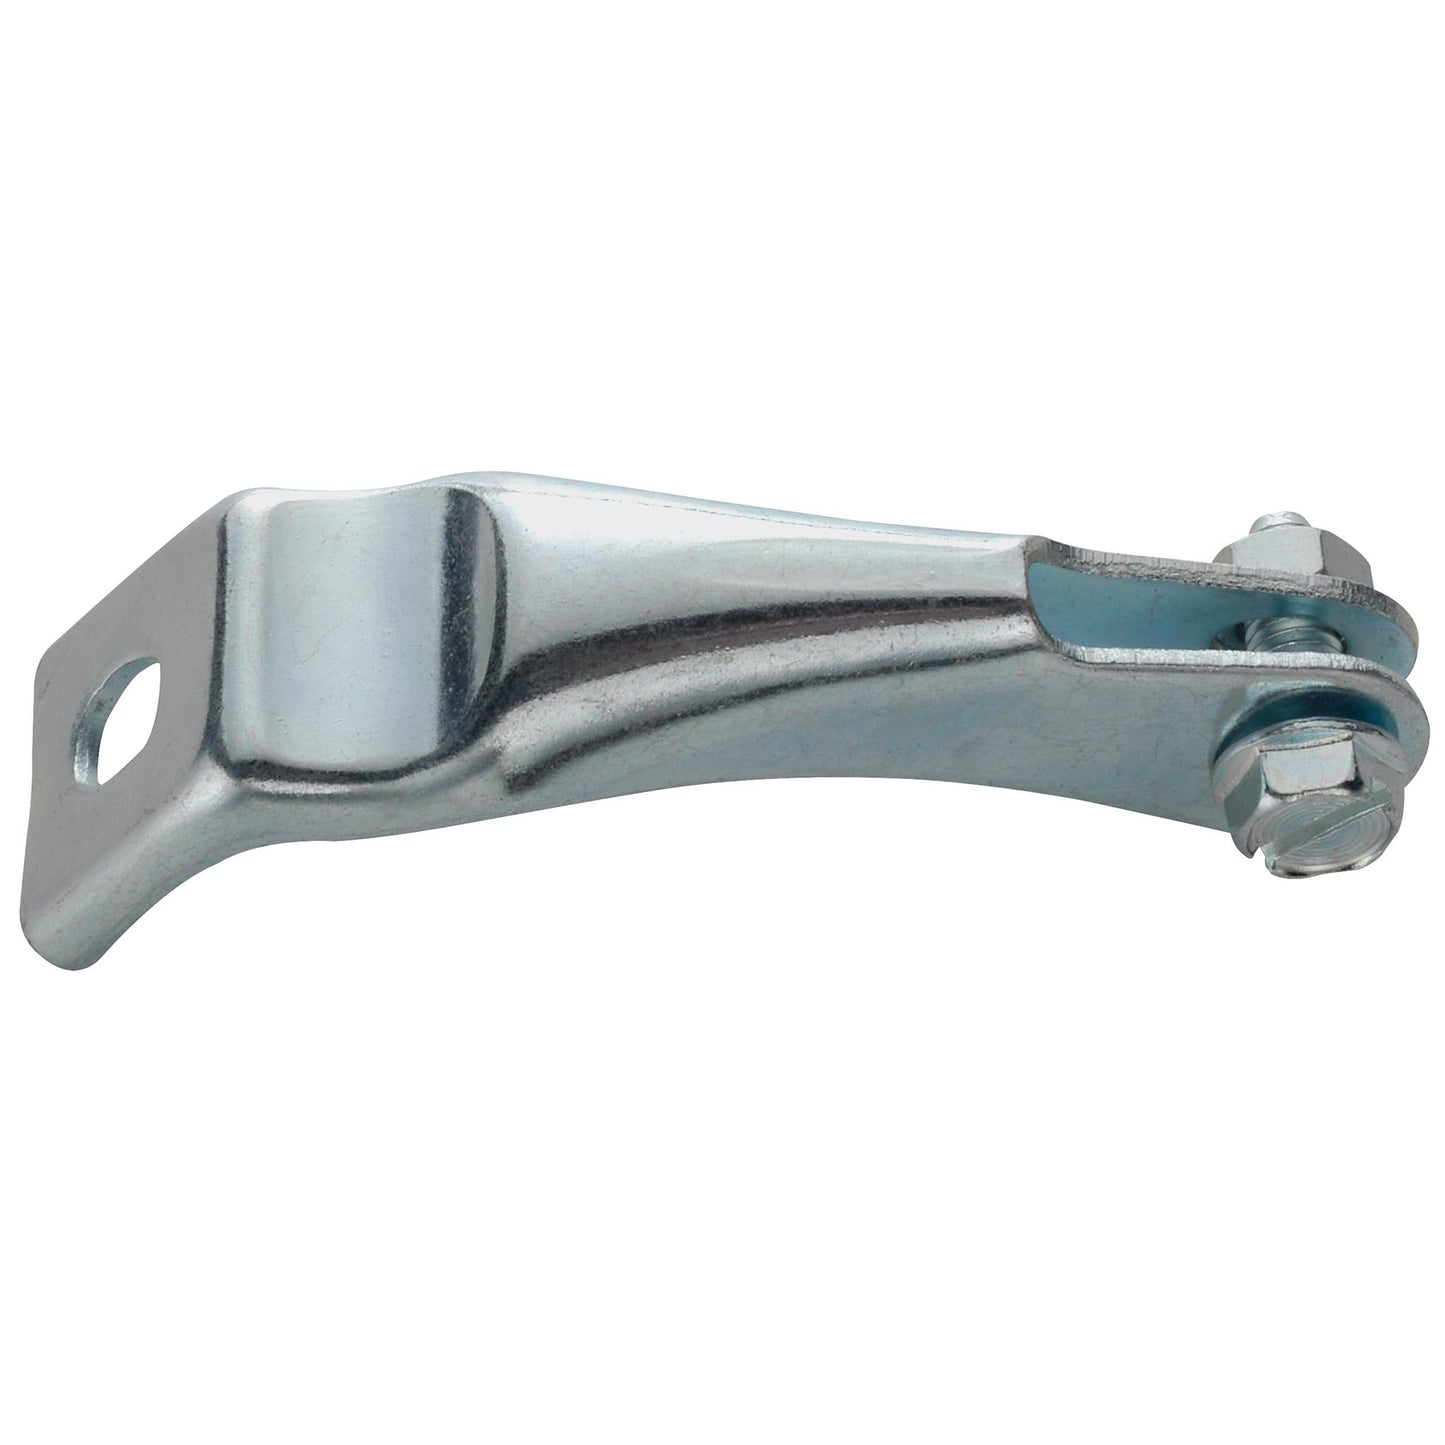 Rim brake - narrow opening, galvanized steel